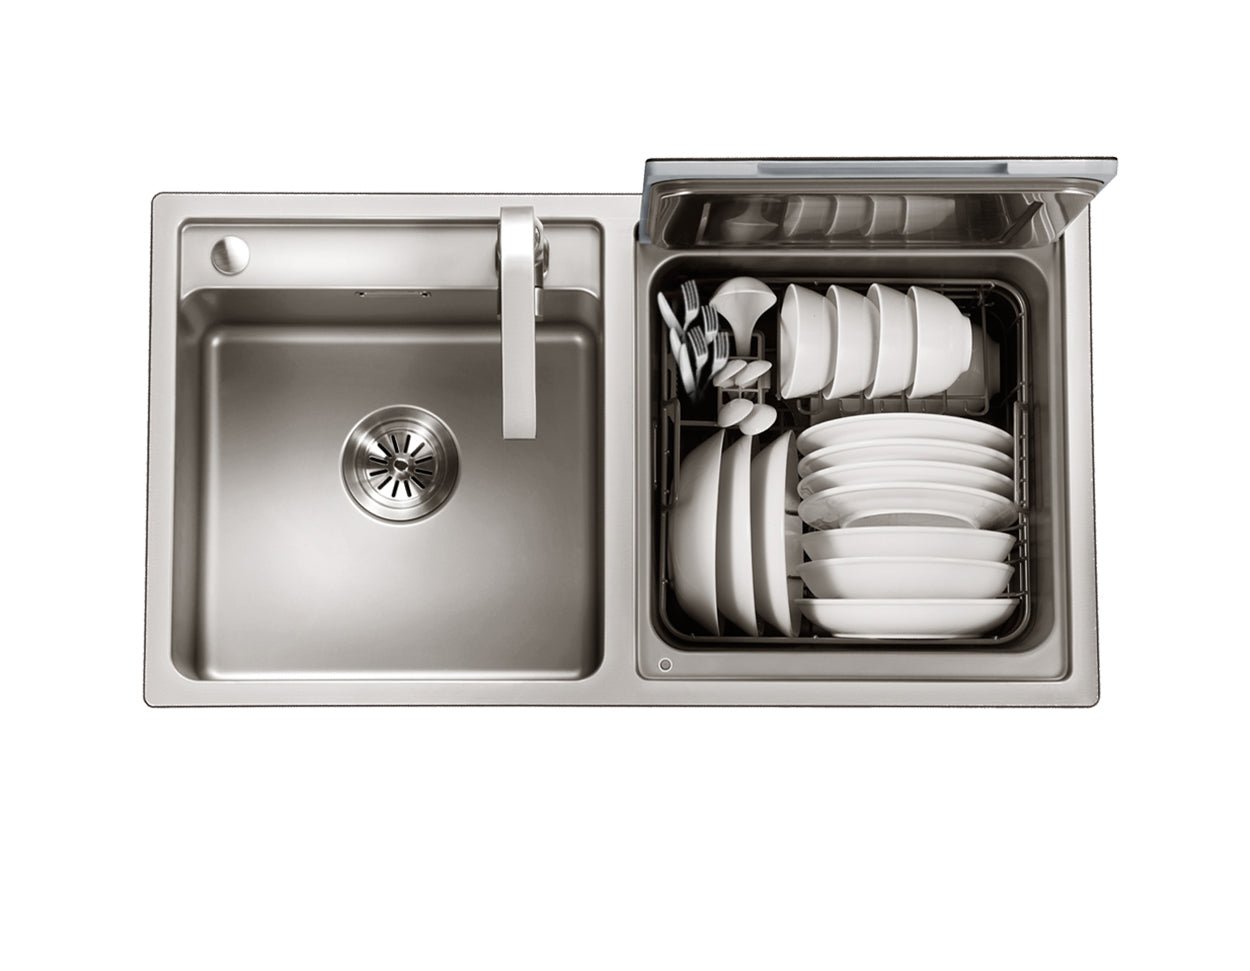 Desktop Dishwasher Integrated Countertop Dishwasher Smart Compact